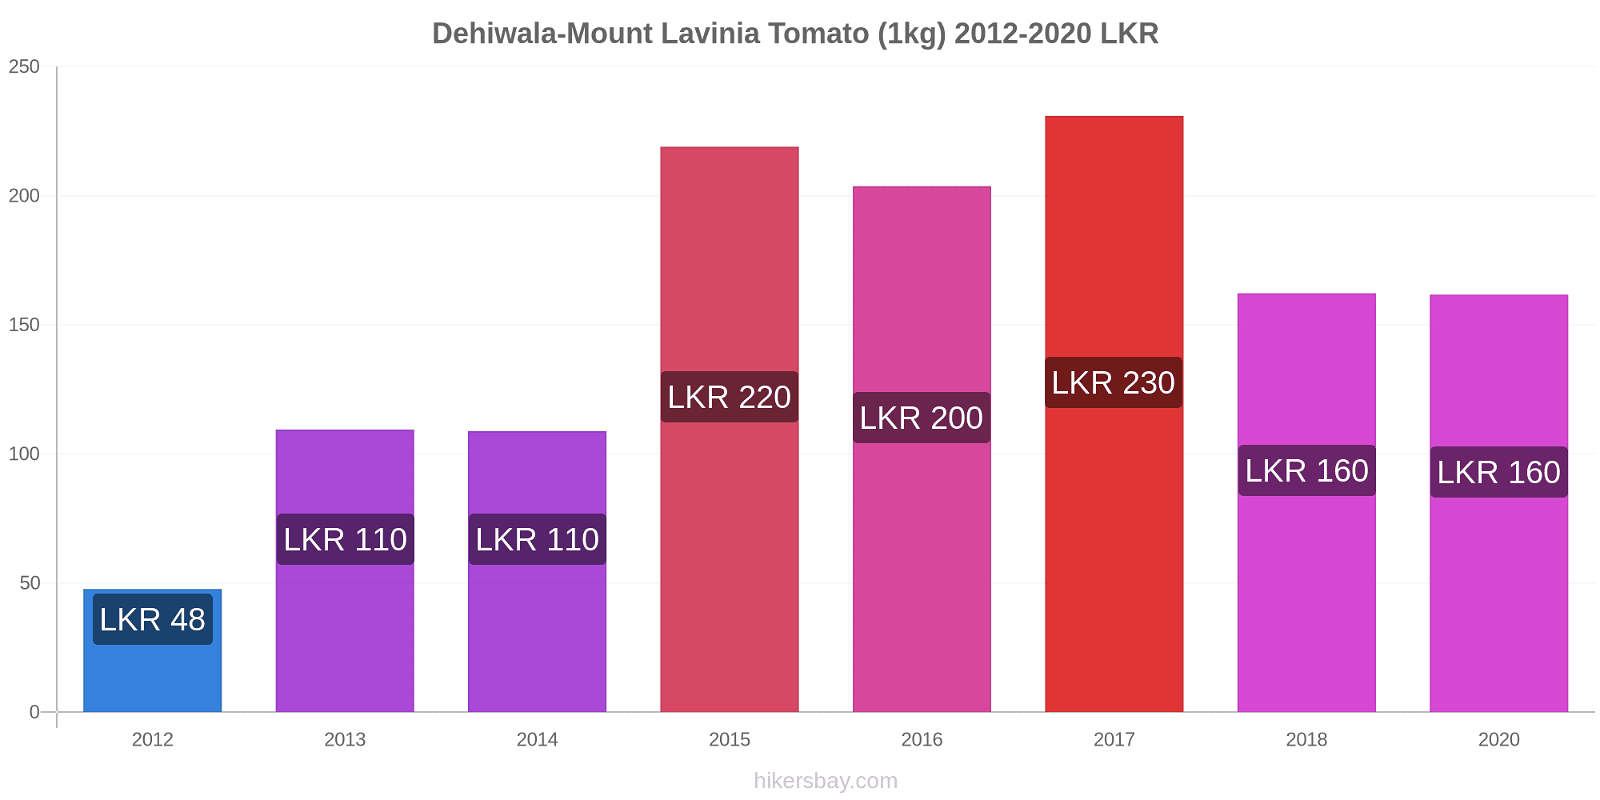 Dehiwala-Mount Lavinia price changes Tomato (1kg) hikersbay.com